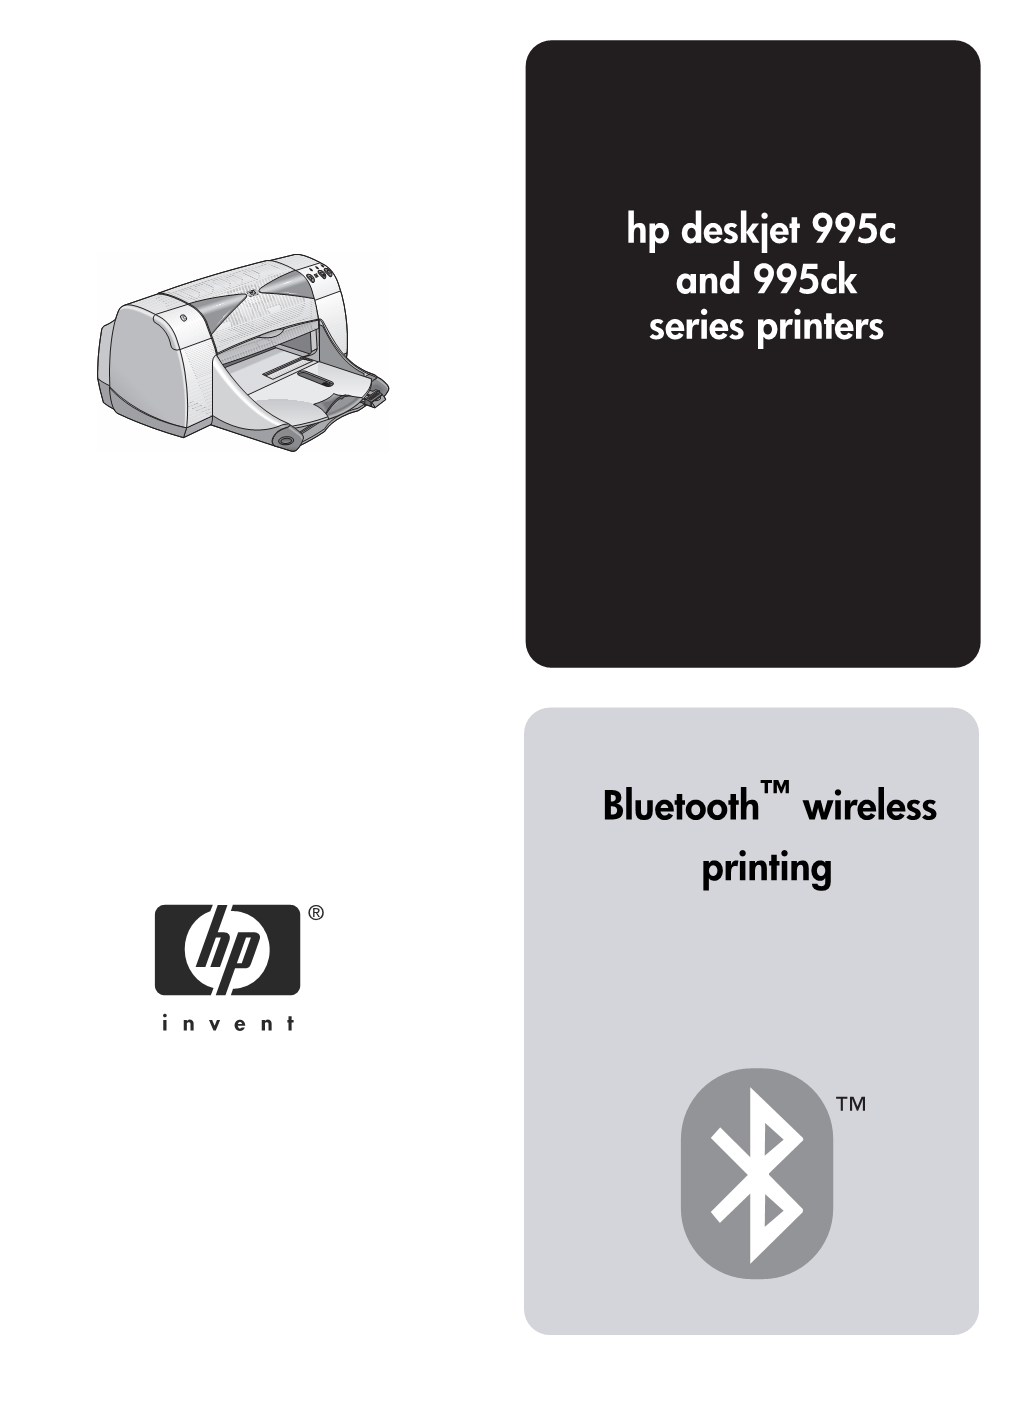 Hp Deskjet 995C Series Printers Bluetooth Wireless Printing and 995Ck